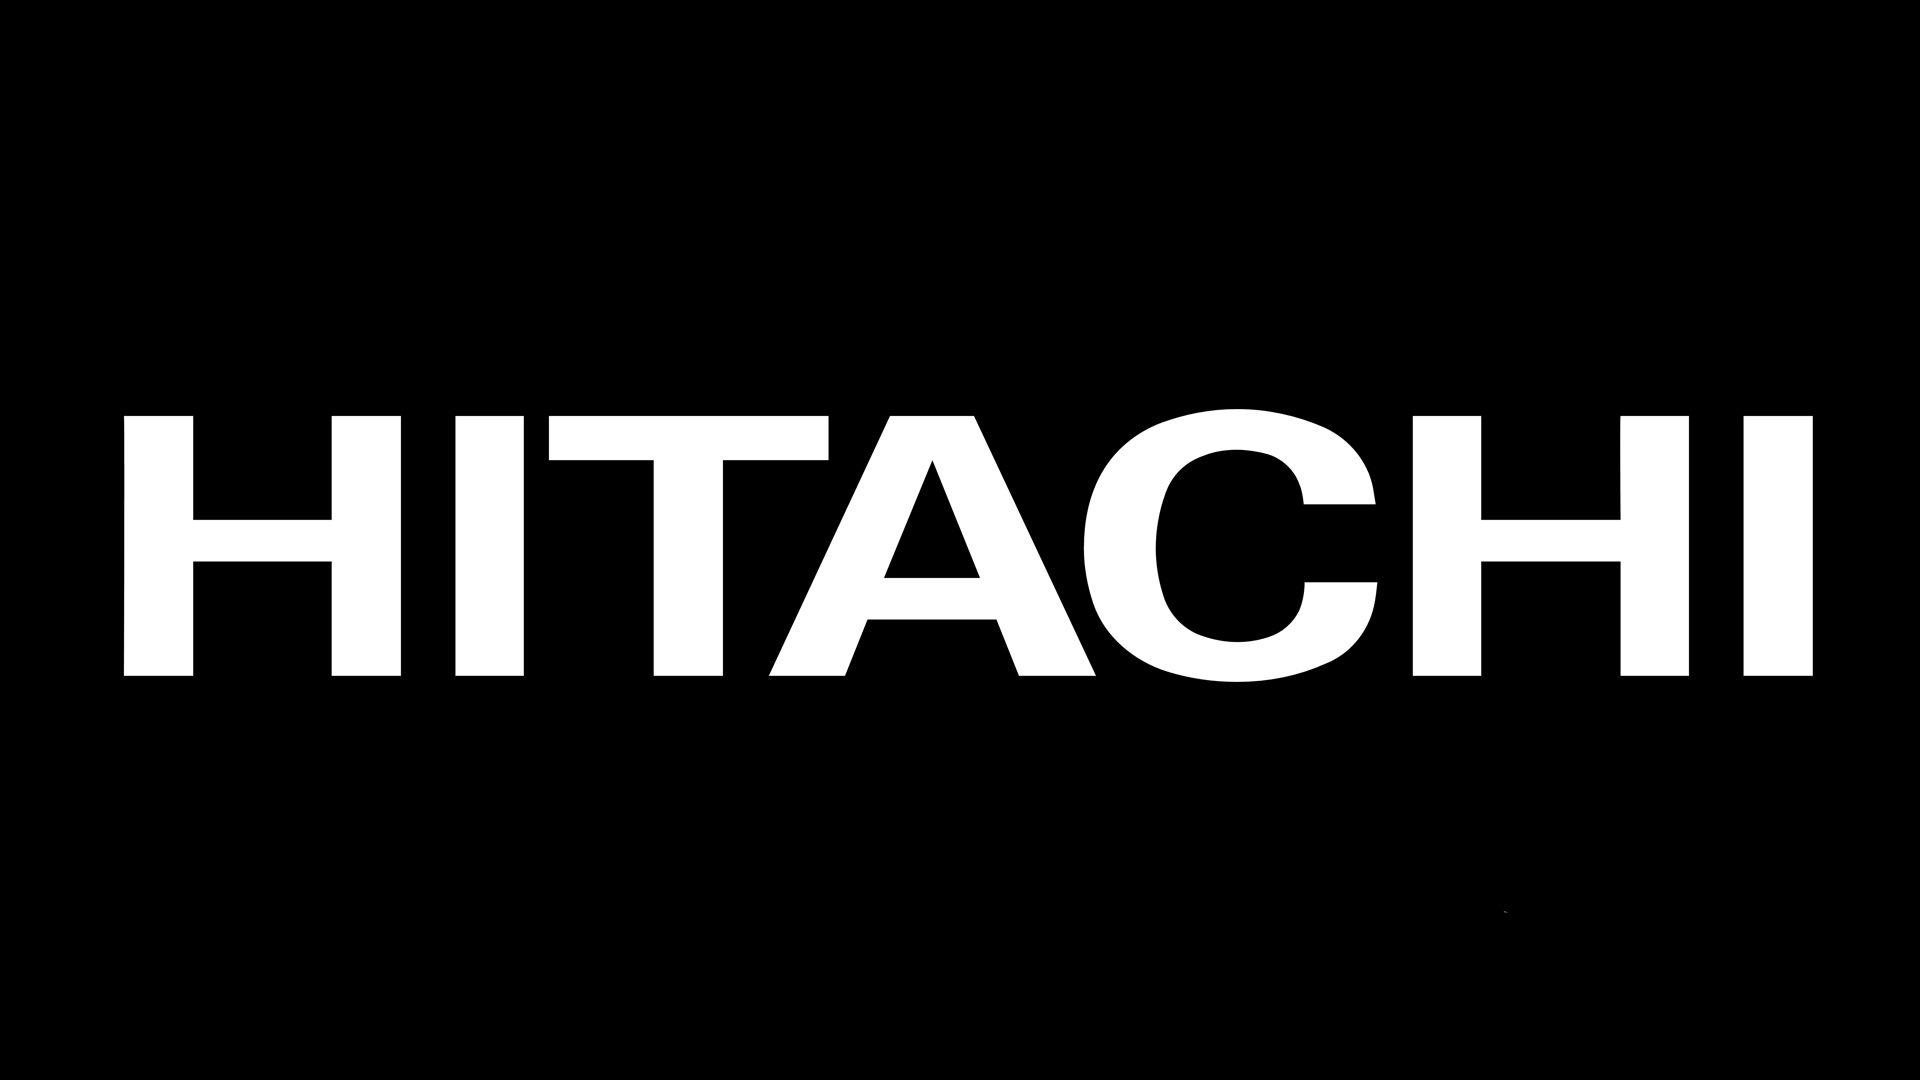 Hitachi White Logo - Hitachi Logo, Hitachi Symbol, Meaning, History and Evolution